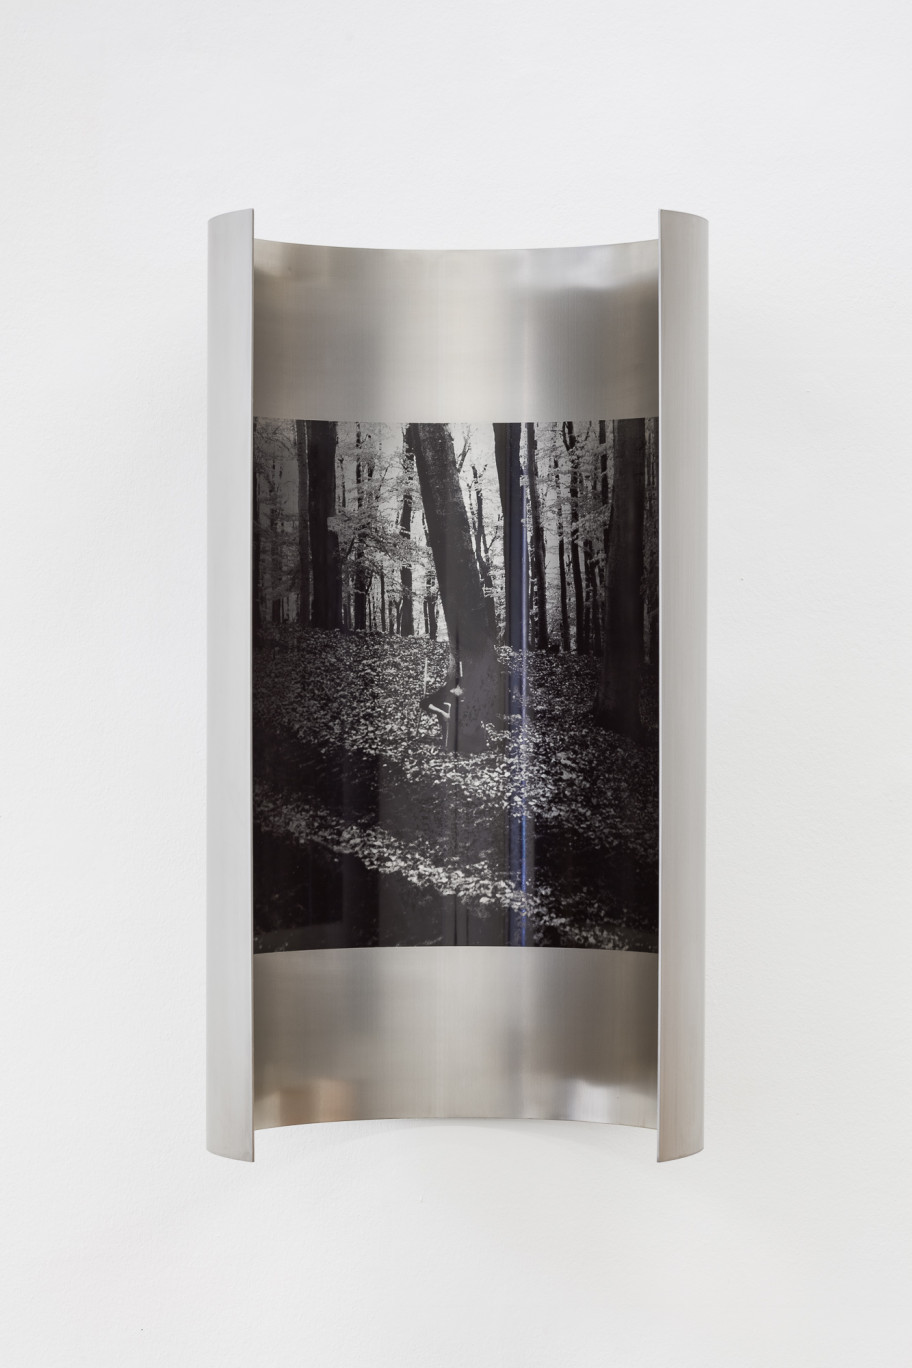  Yu  Ji Refined Still Life No. 9, 2021 stainless steel, silkscreen print 100 x 55 x 43 cm 